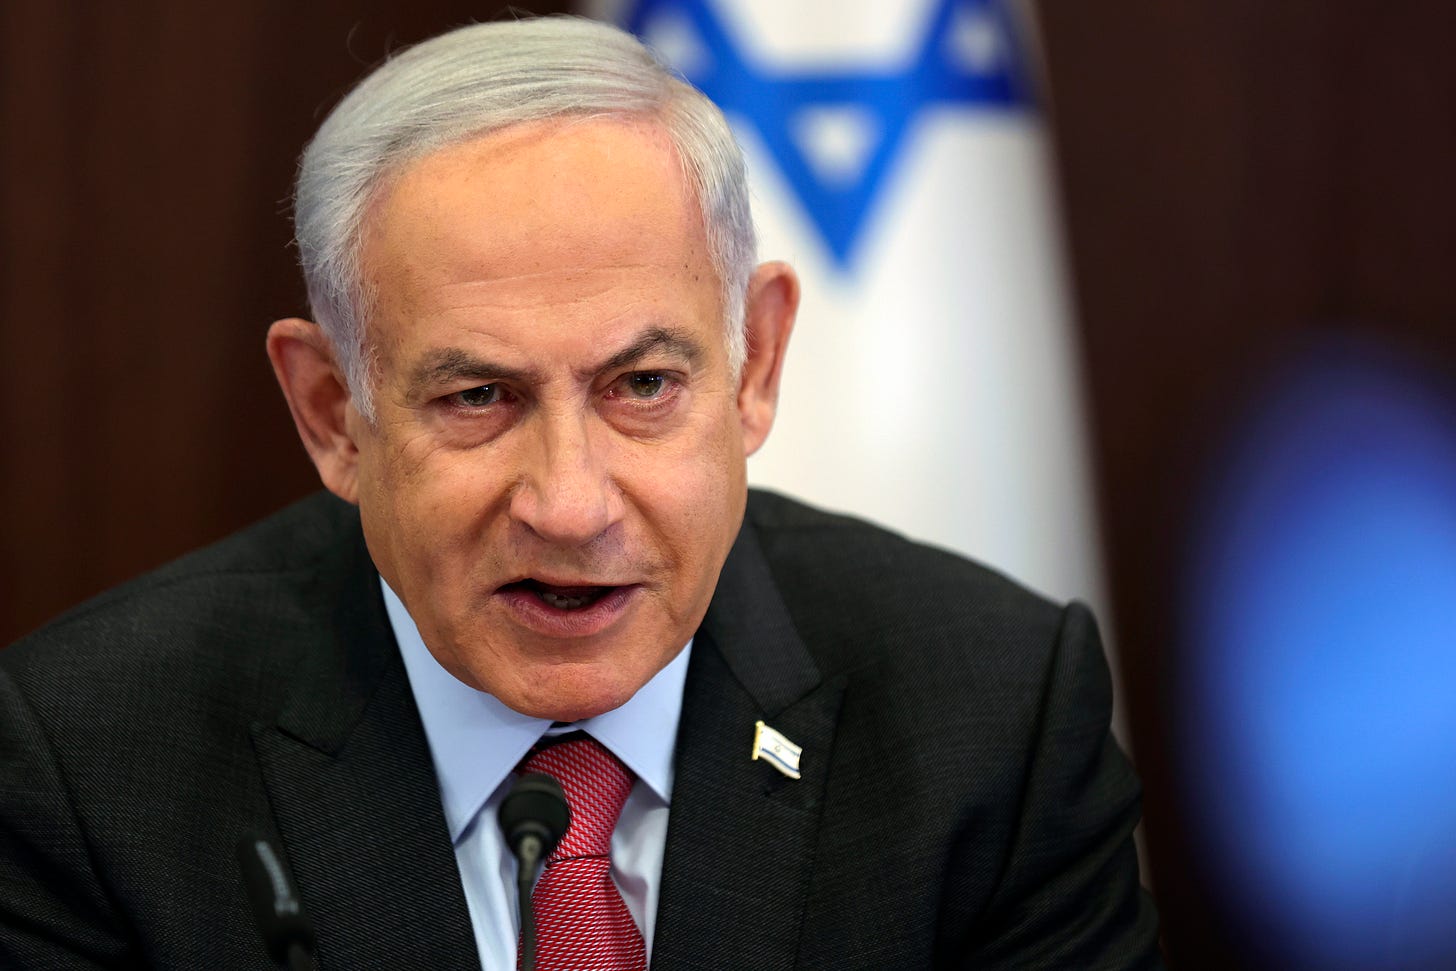 Israeli PM Benjamin Netanyahu - embroiled in a war with Hamas in Gaza